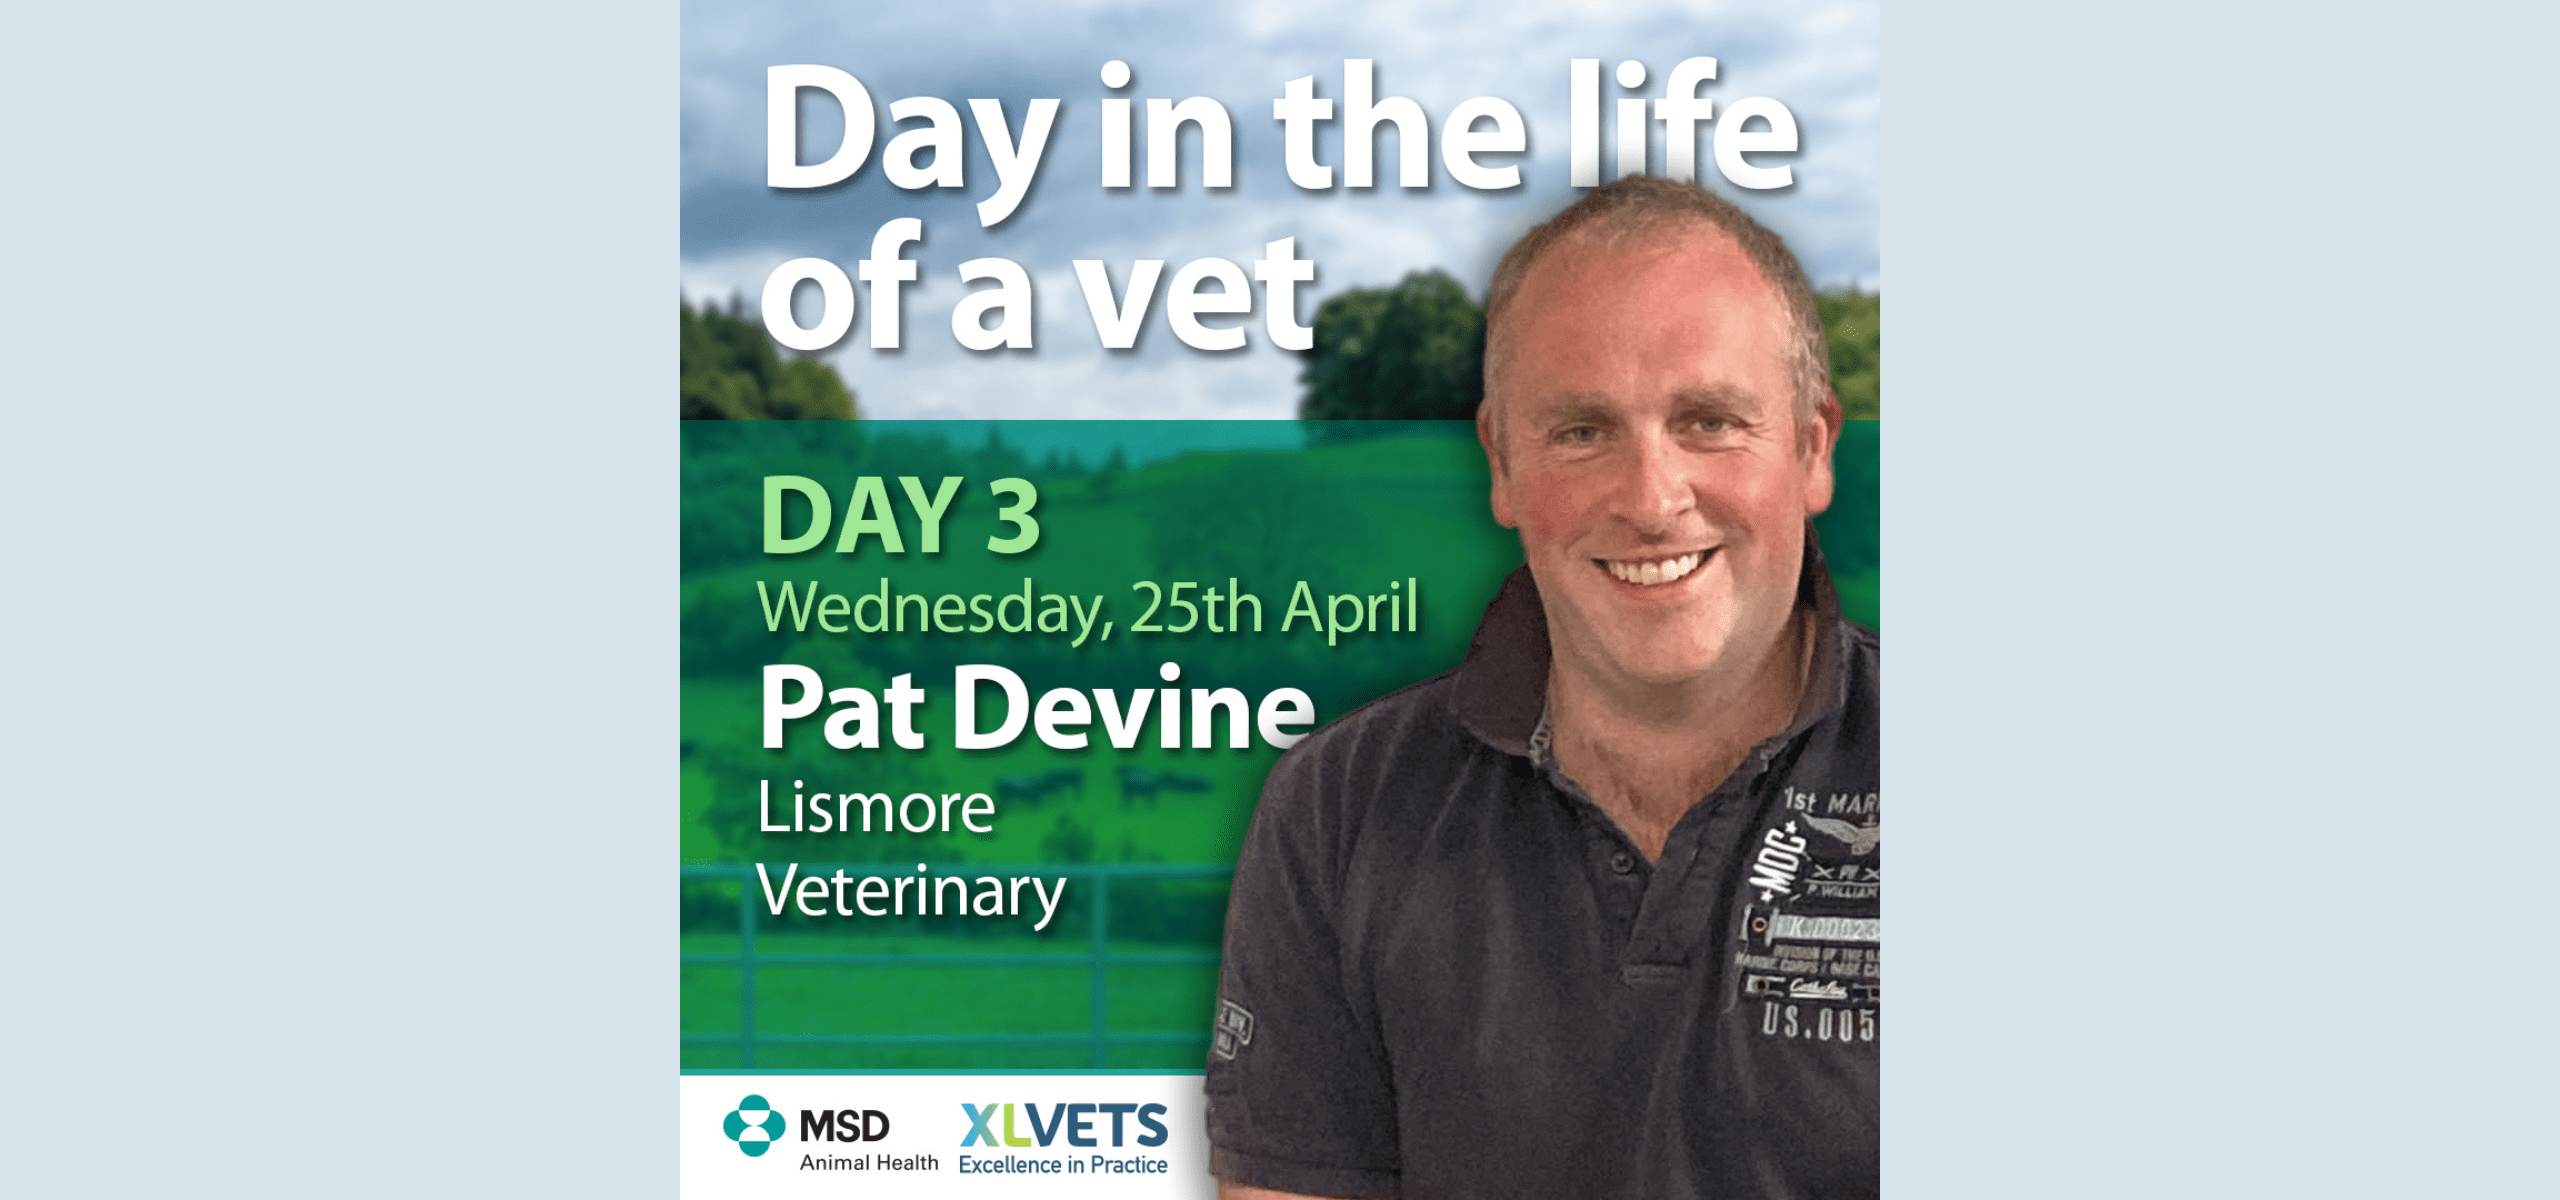 Day in the life: Pre-breeding preparation with vet, Pat Devine, Lismore Veterinary